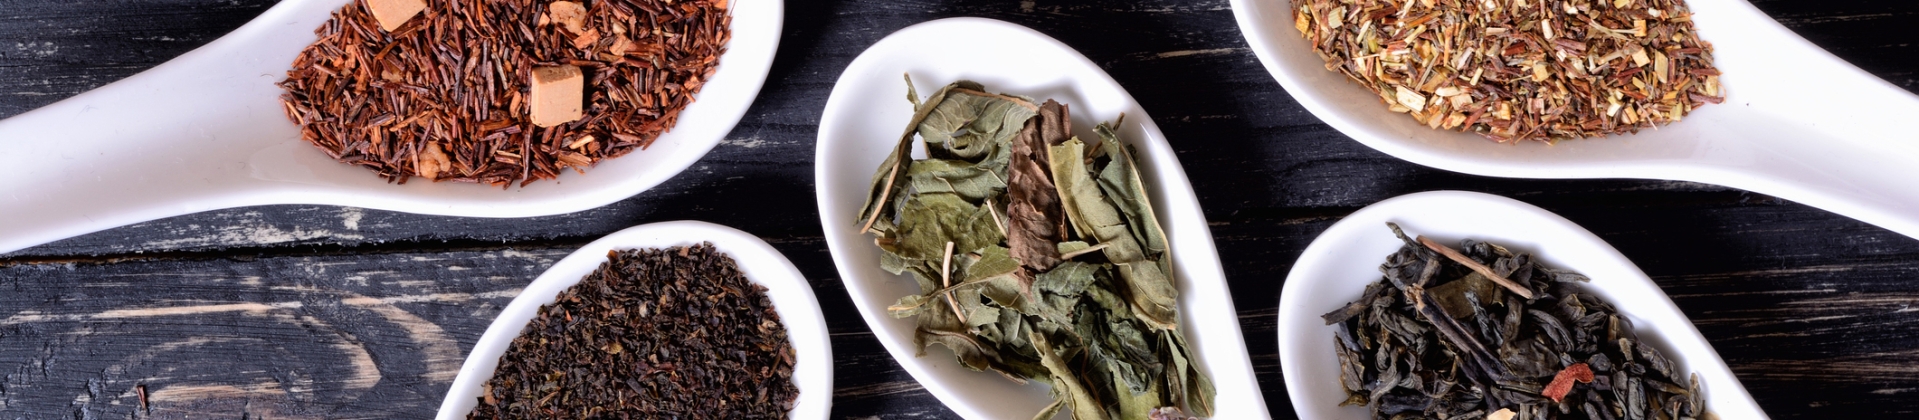 Loose Leaf Tea Collections - Cup of Tea